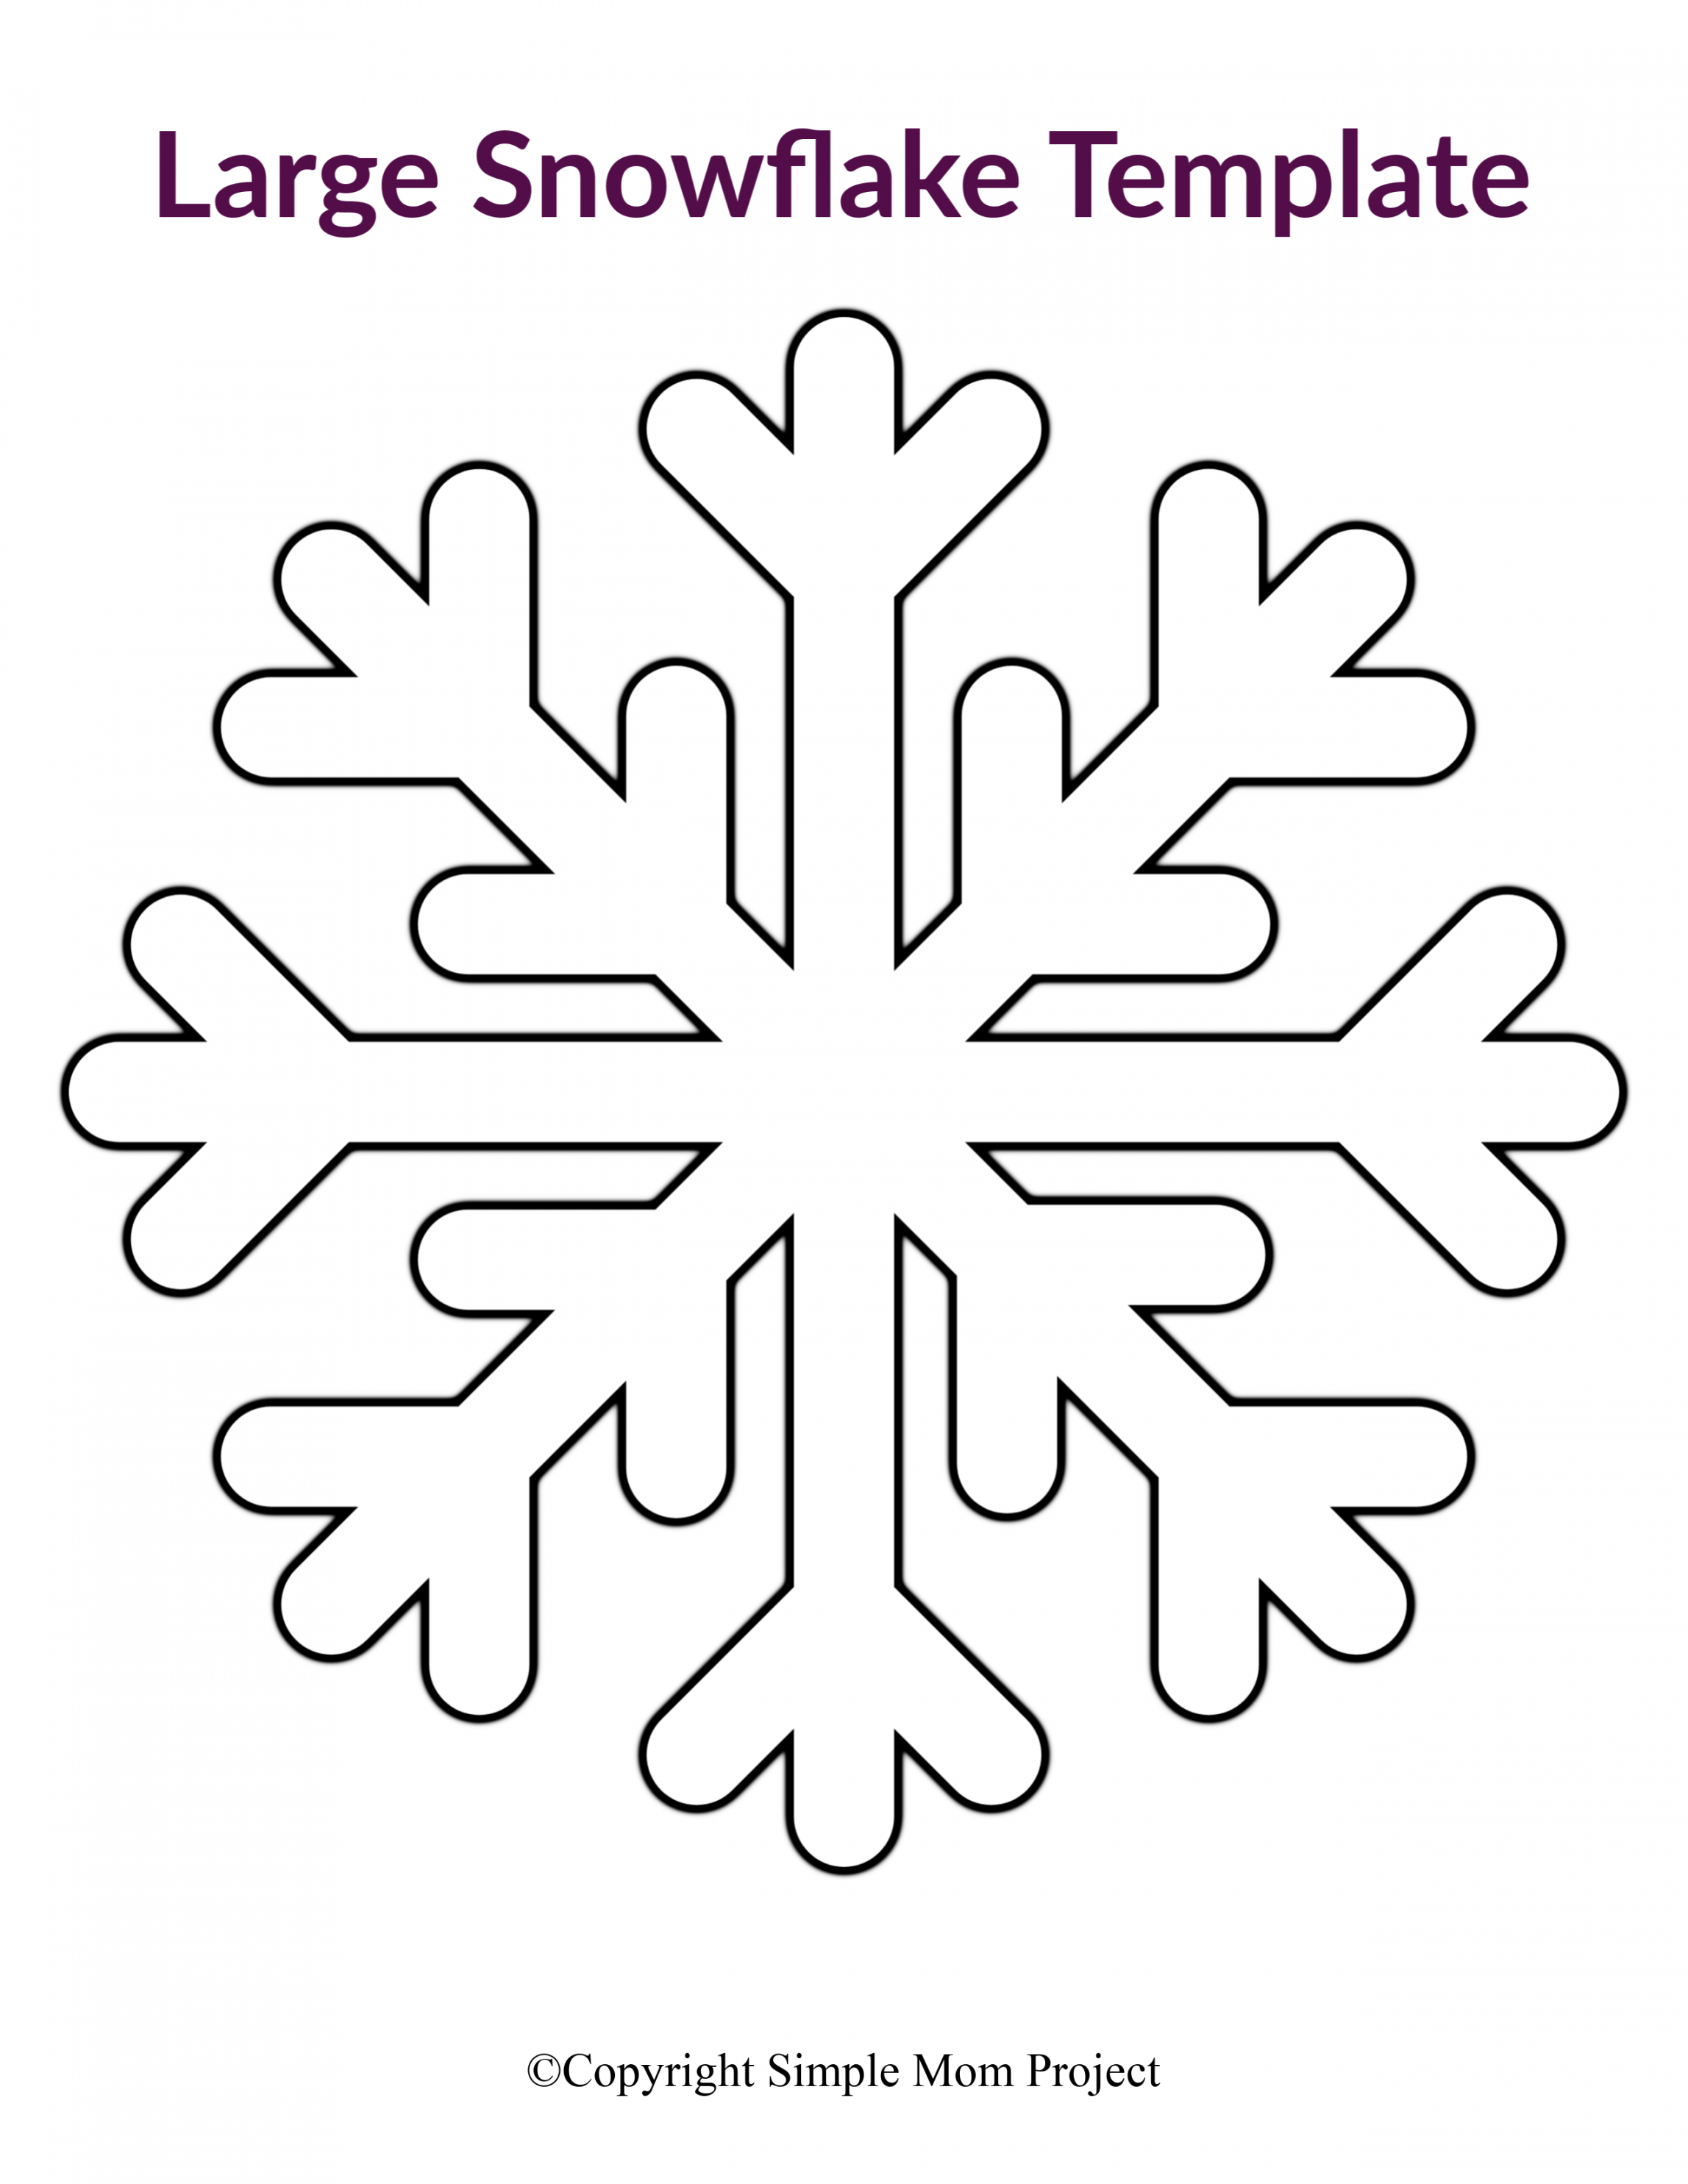 Free Printable Large Snowflake Templates - Simple Mom Project - FREE Printables - Snowflake Template